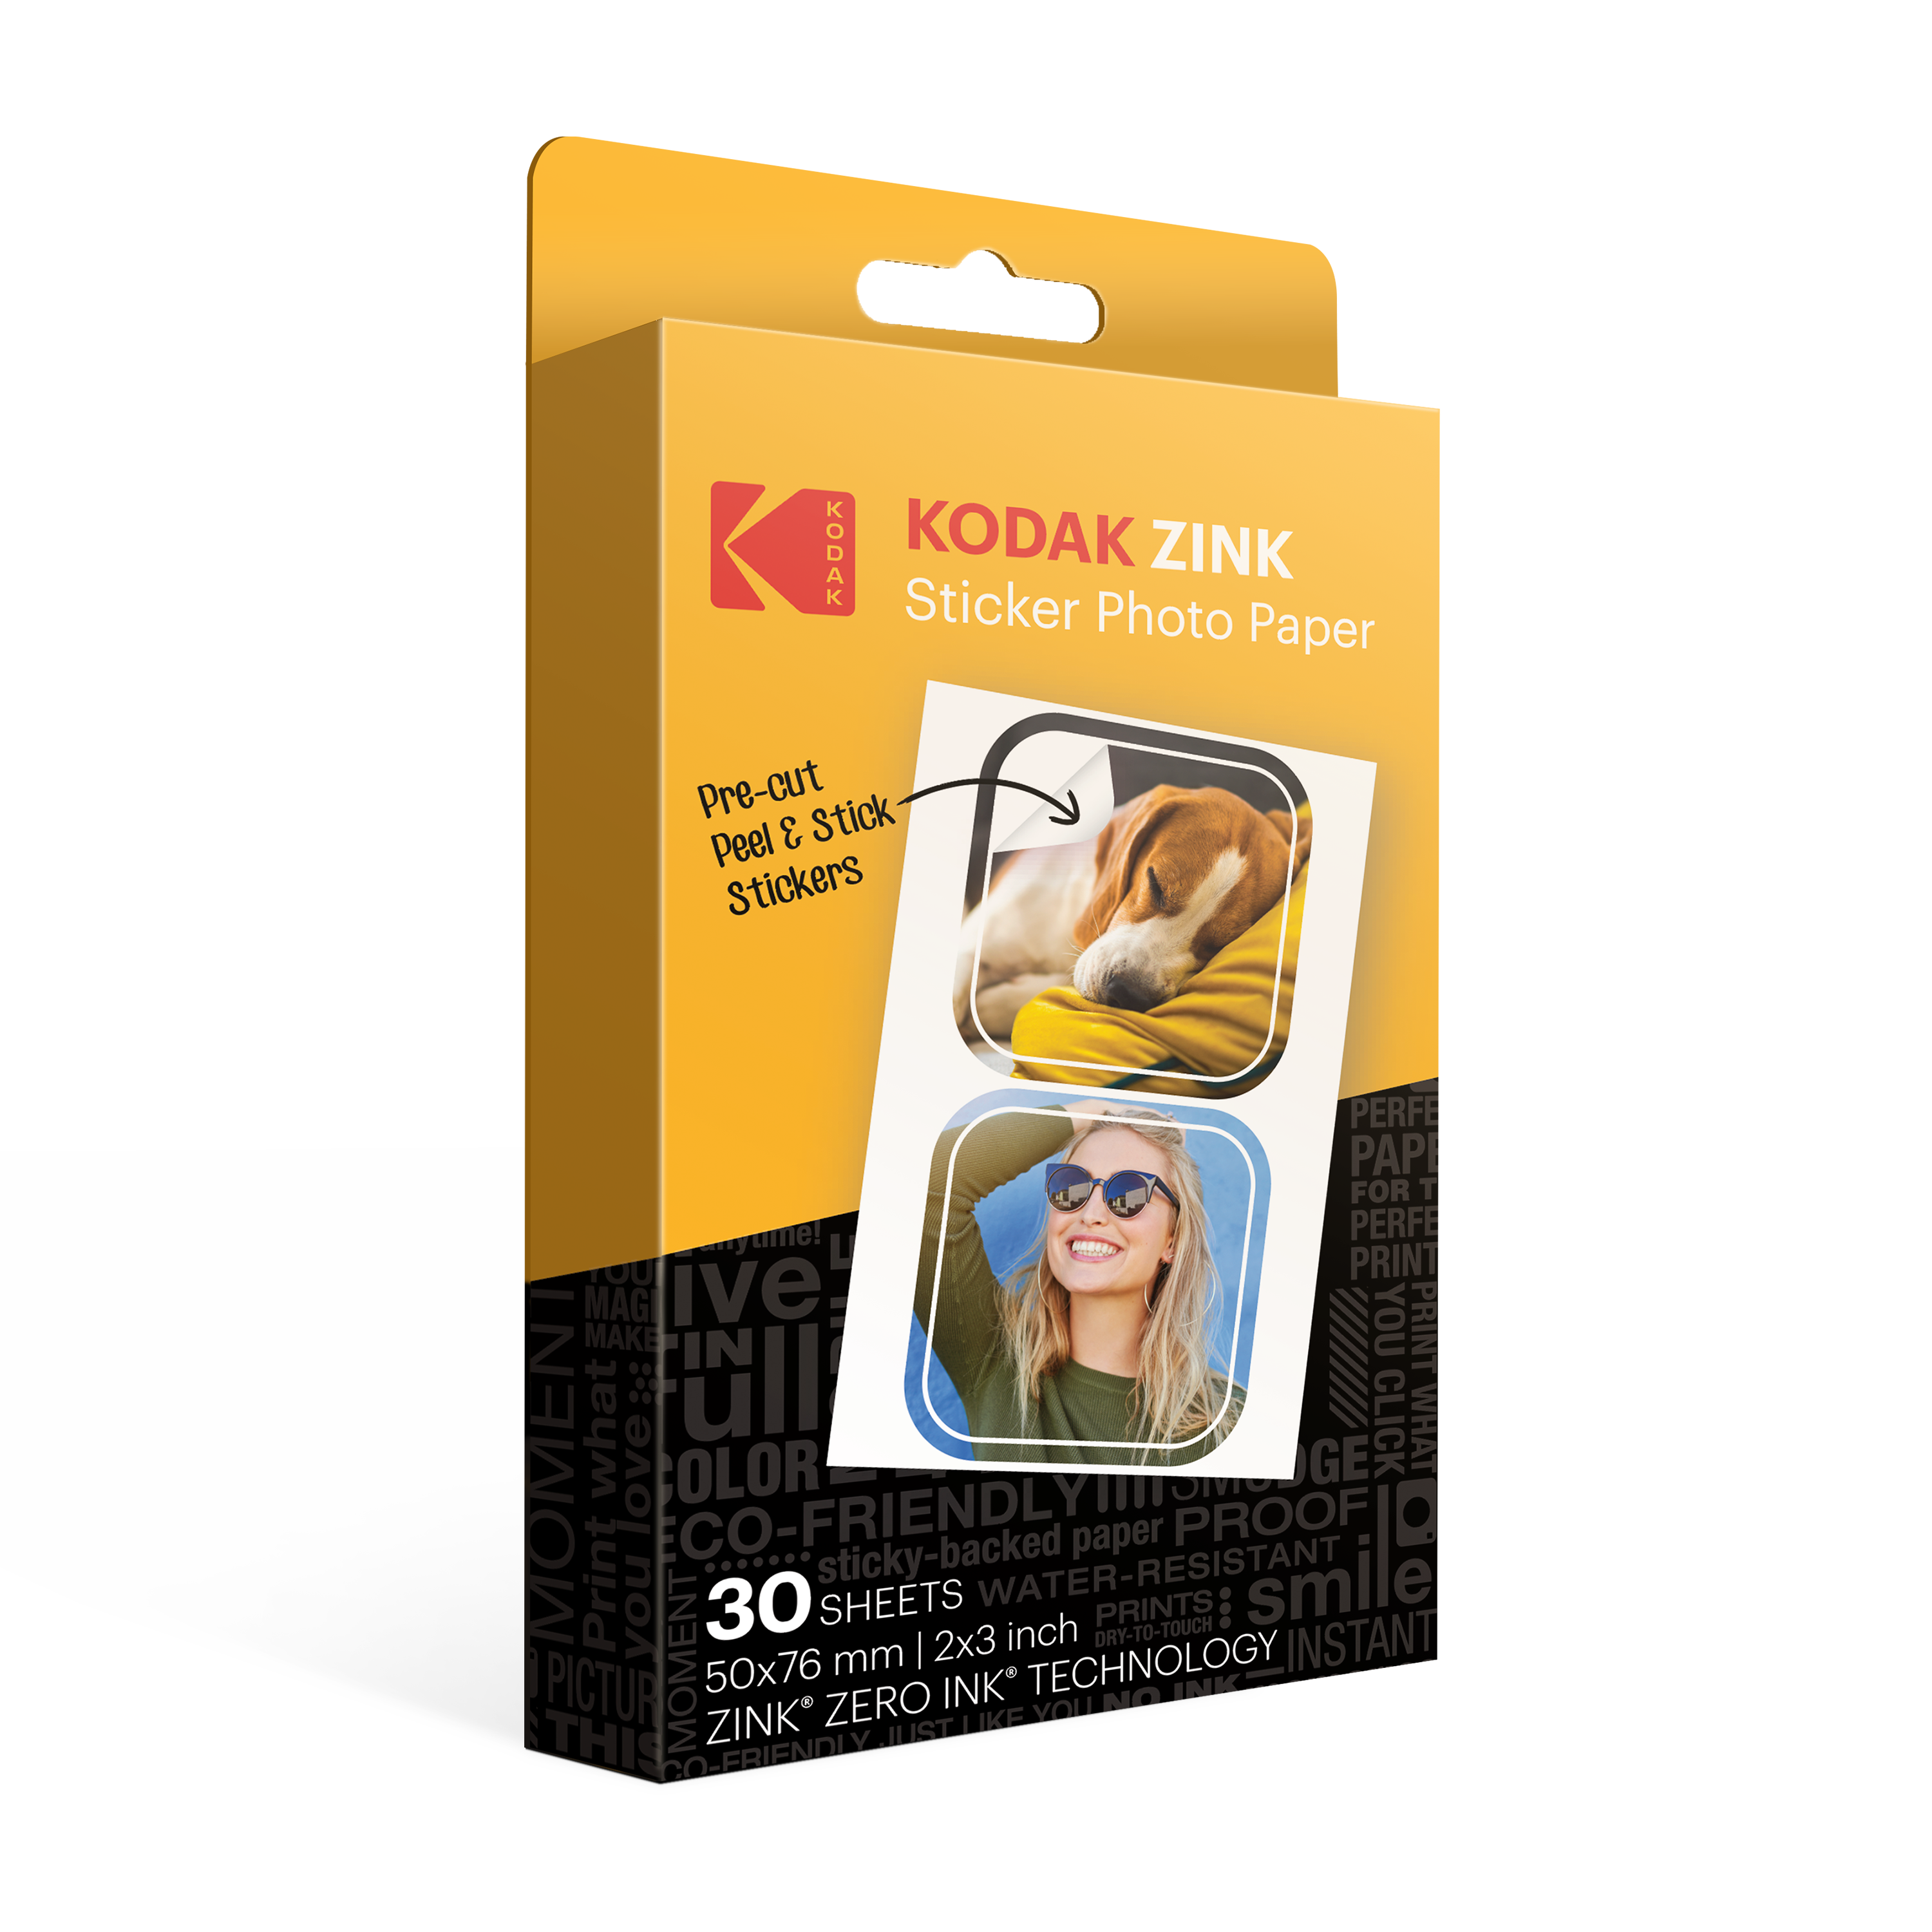 Kodak 2”x3” Zink Pre-Cut Sticker Photo Paper 30 Sheets, Kodak Photo Plus  UK